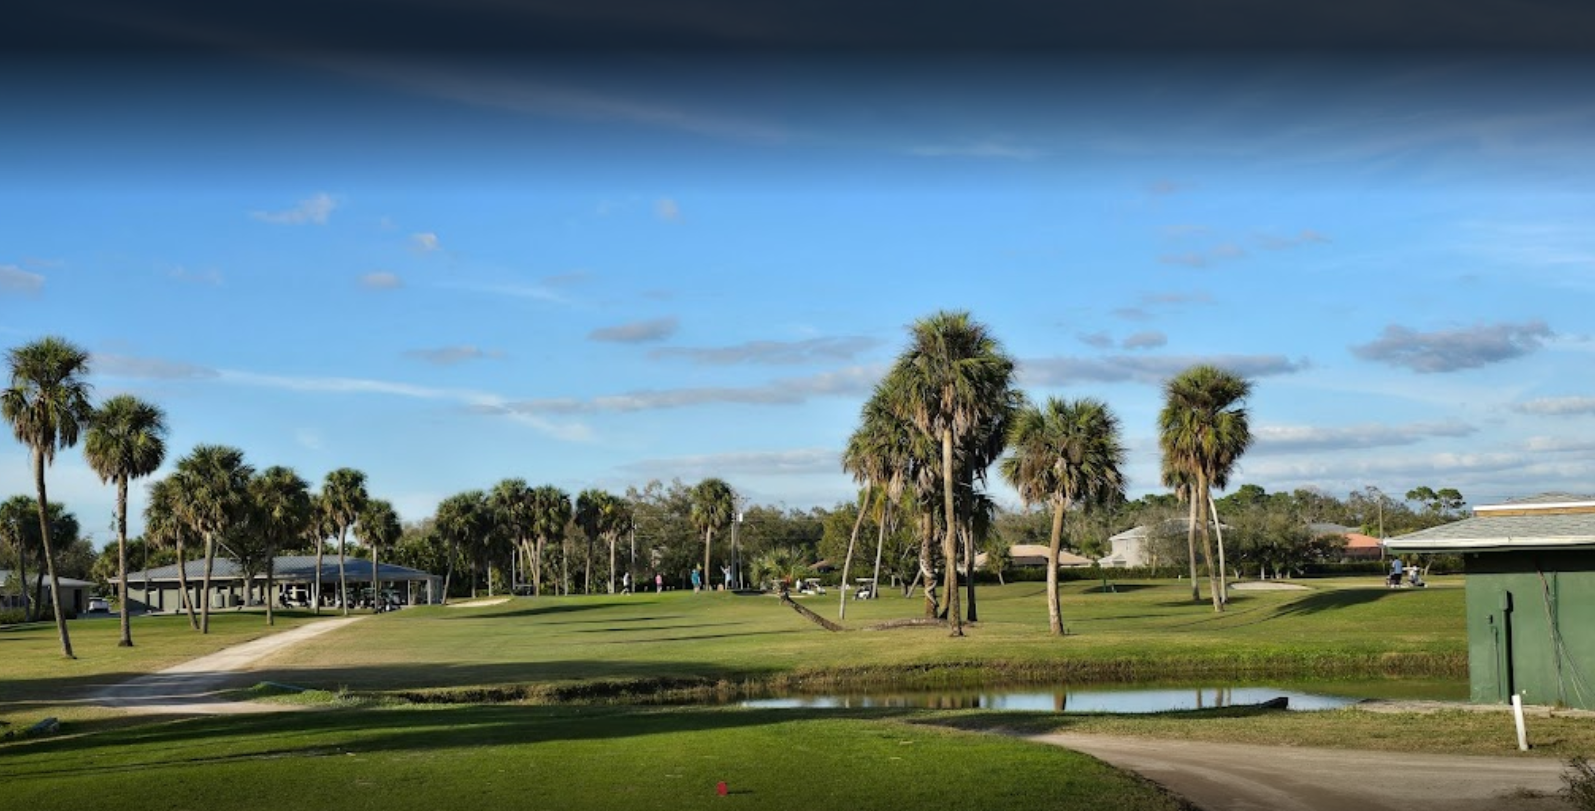 Golf course with lake -El Rio Golf Club